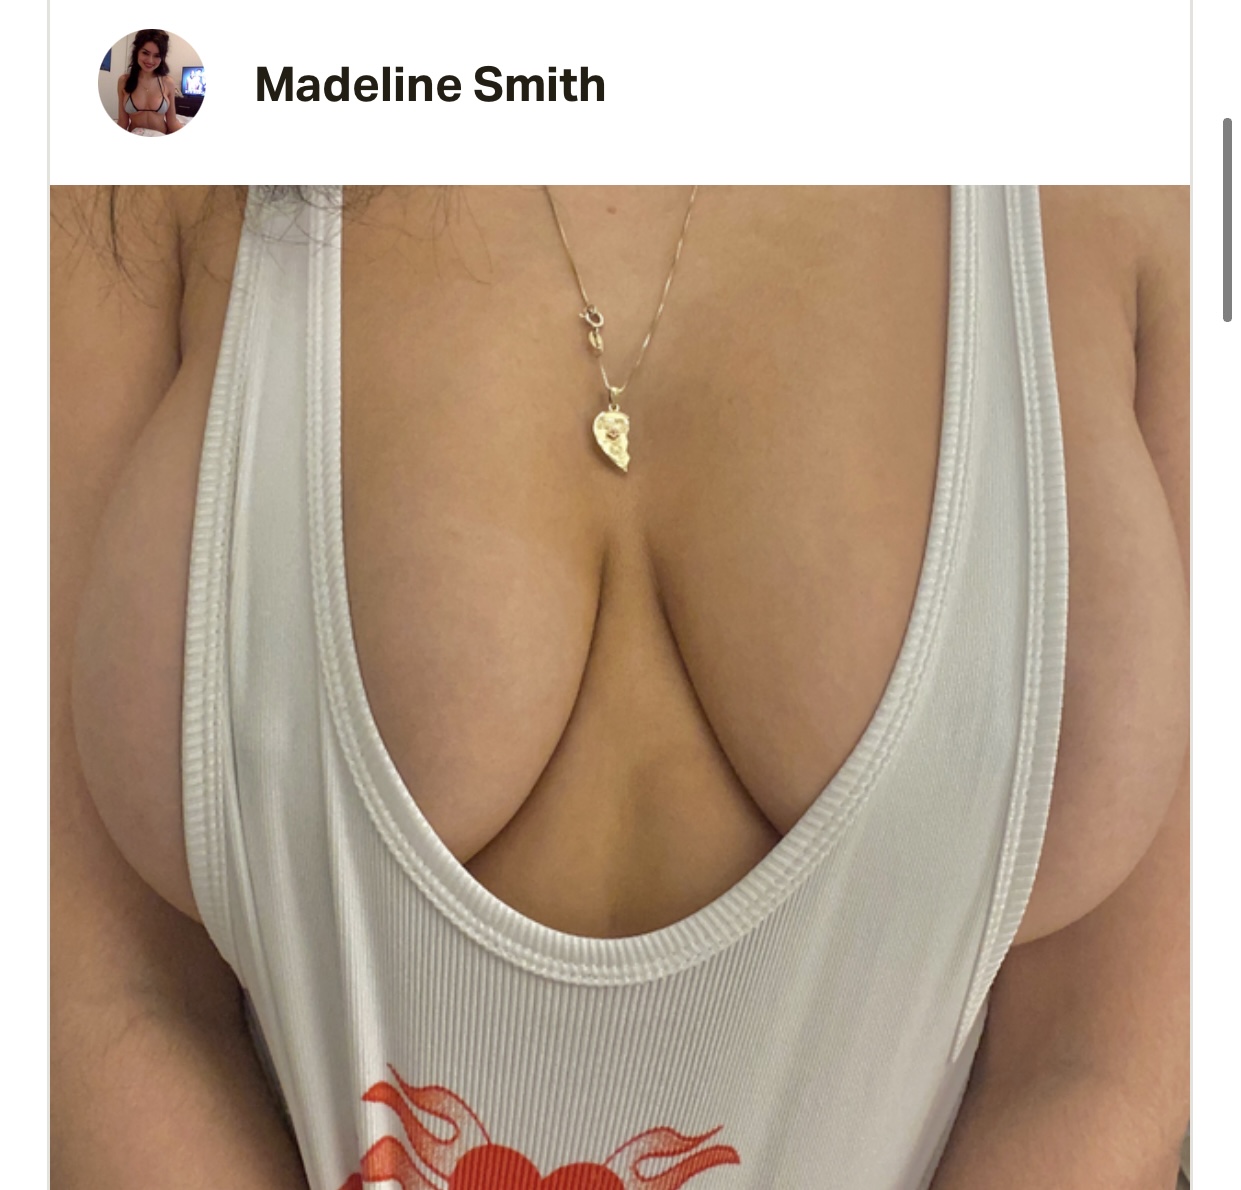 1661925857 653 Madeline Smith